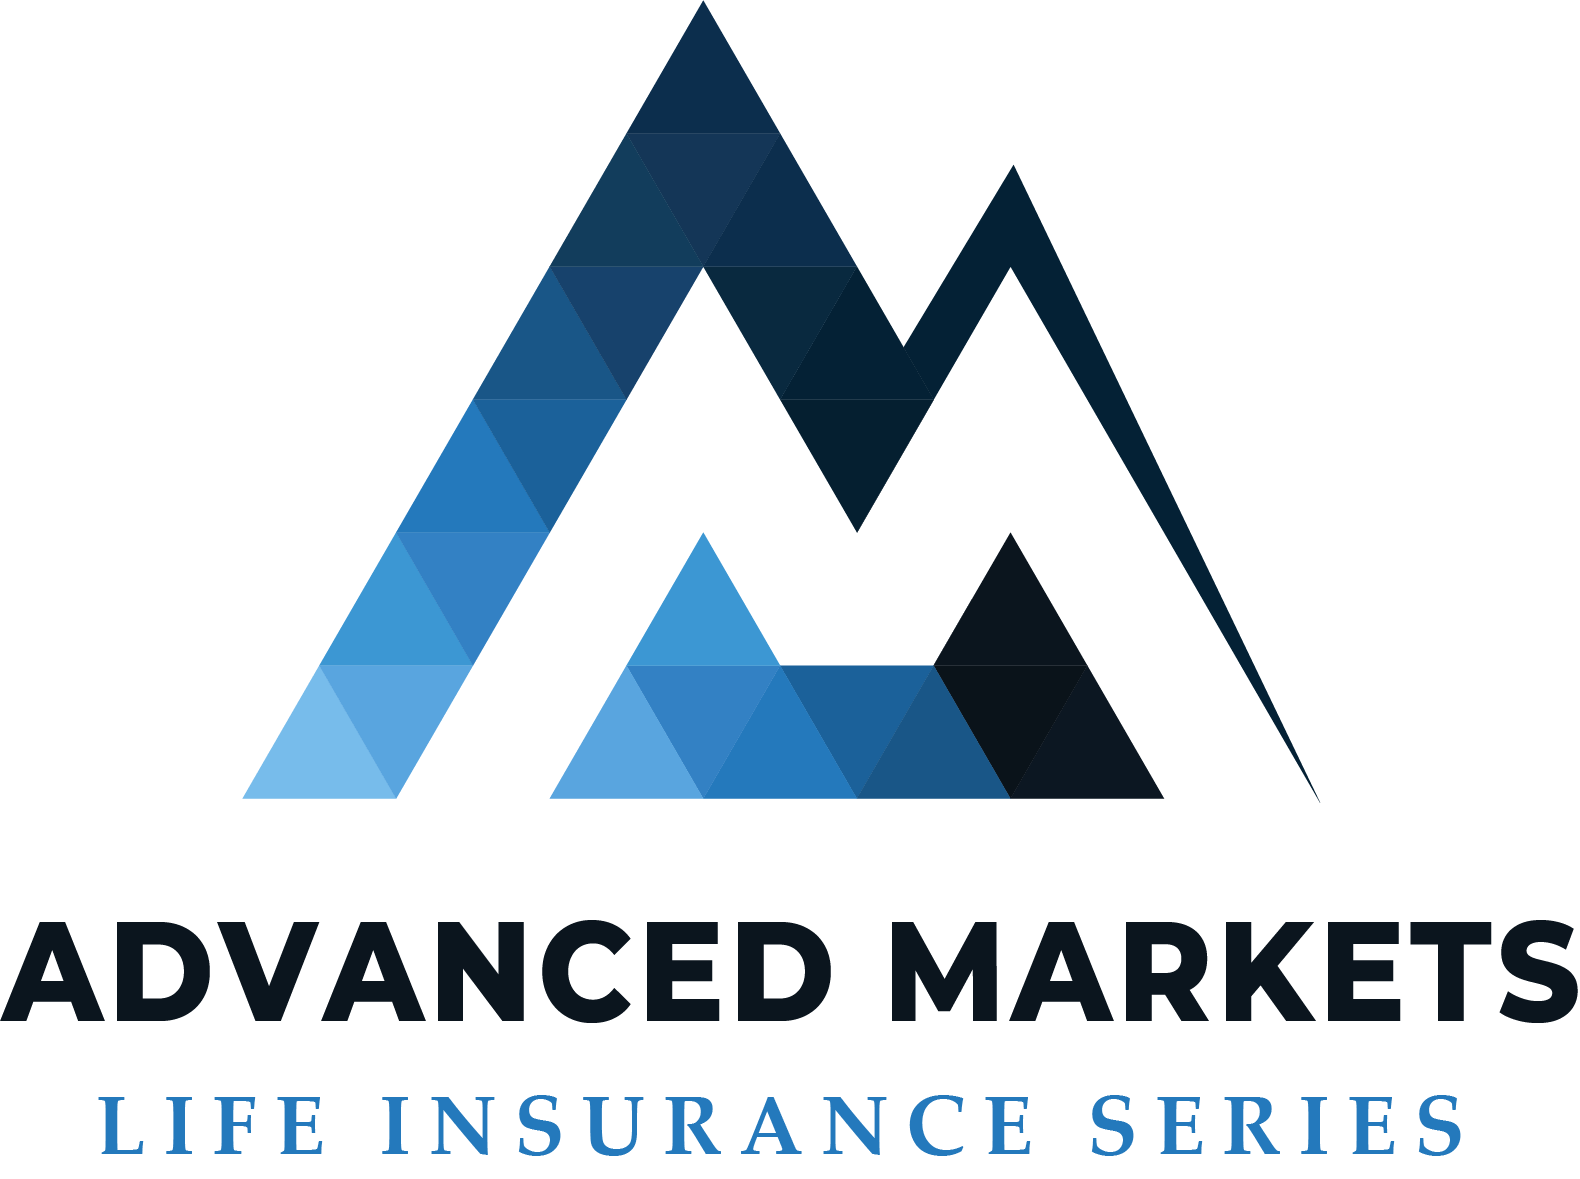 Advanced Markets Life Insurance Series